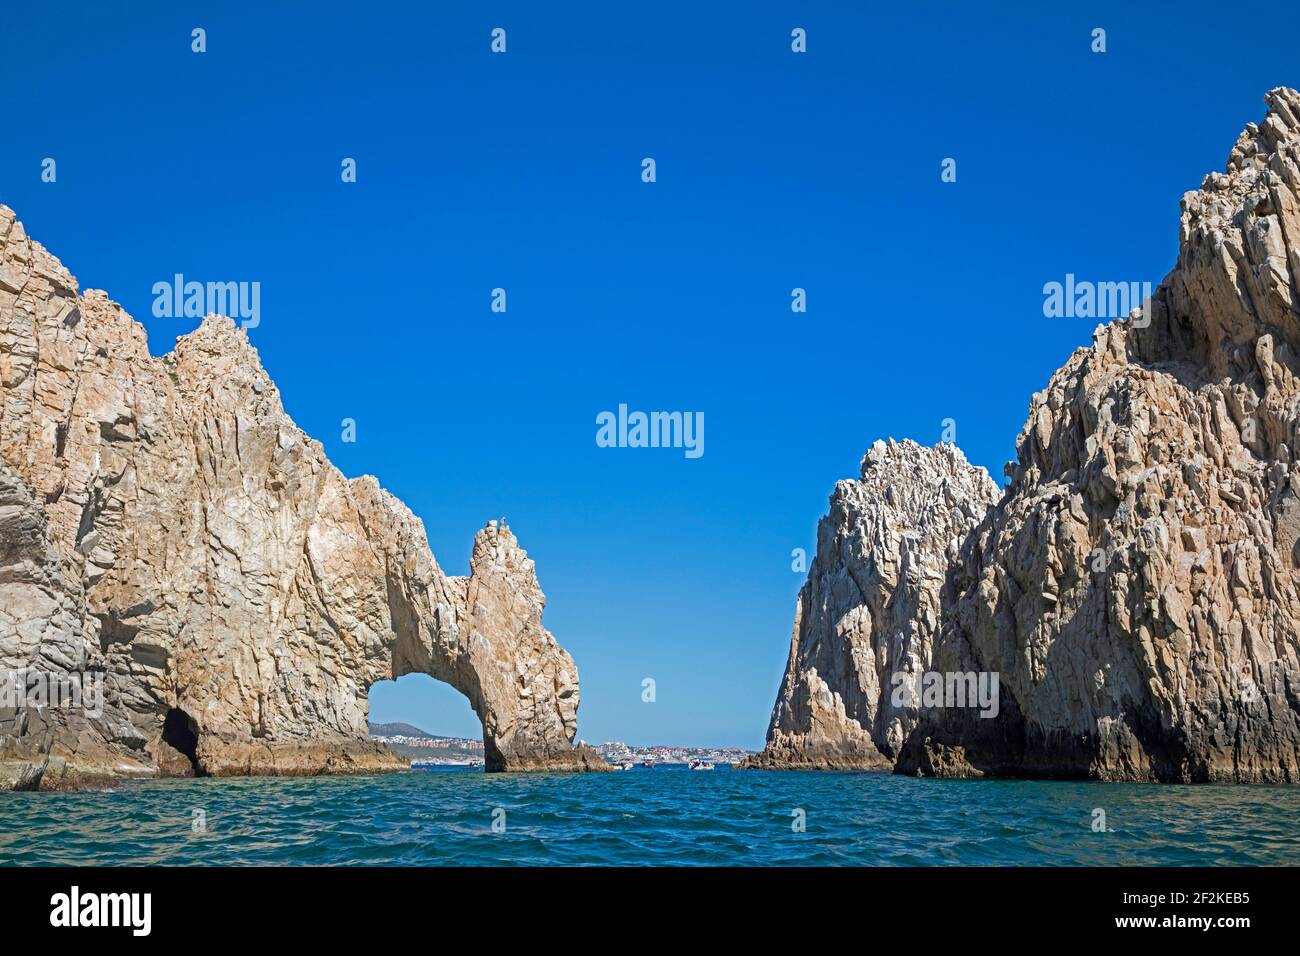 Natural Arch of Cabo San Lucas / El Arco, where the Gulf of California meets the Pacific Ocean on the peninsula of Baja California Sur, Mexico Stock Photo